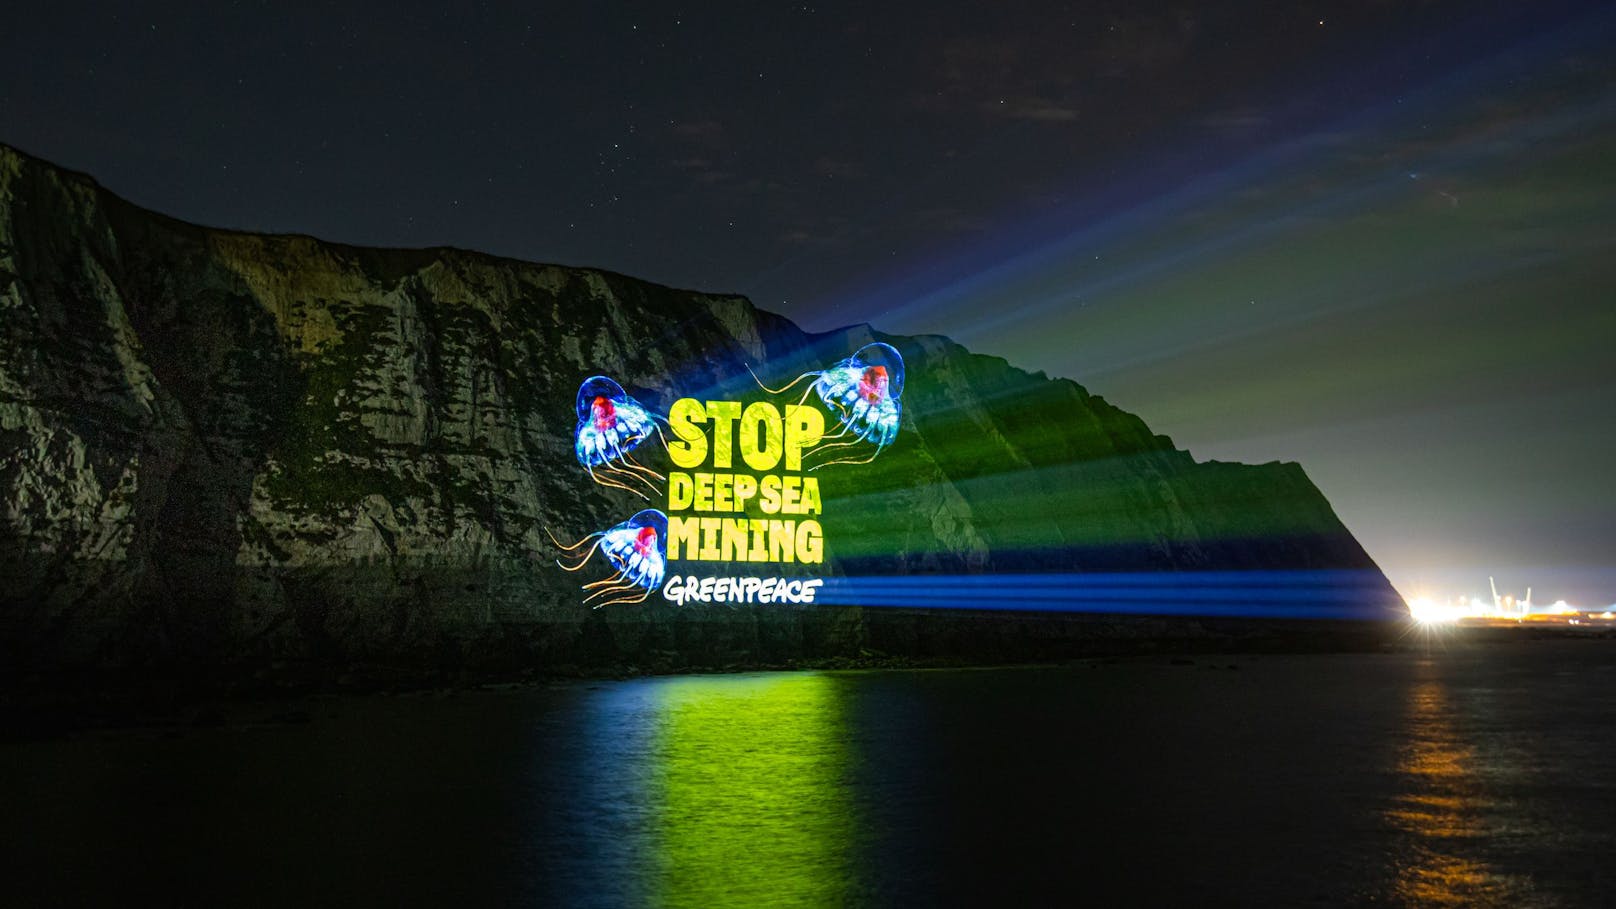 Greenpeace-Protest gegen Tiefseebergbau vor der Küste Englands, bei den White Cliffs of Dover.